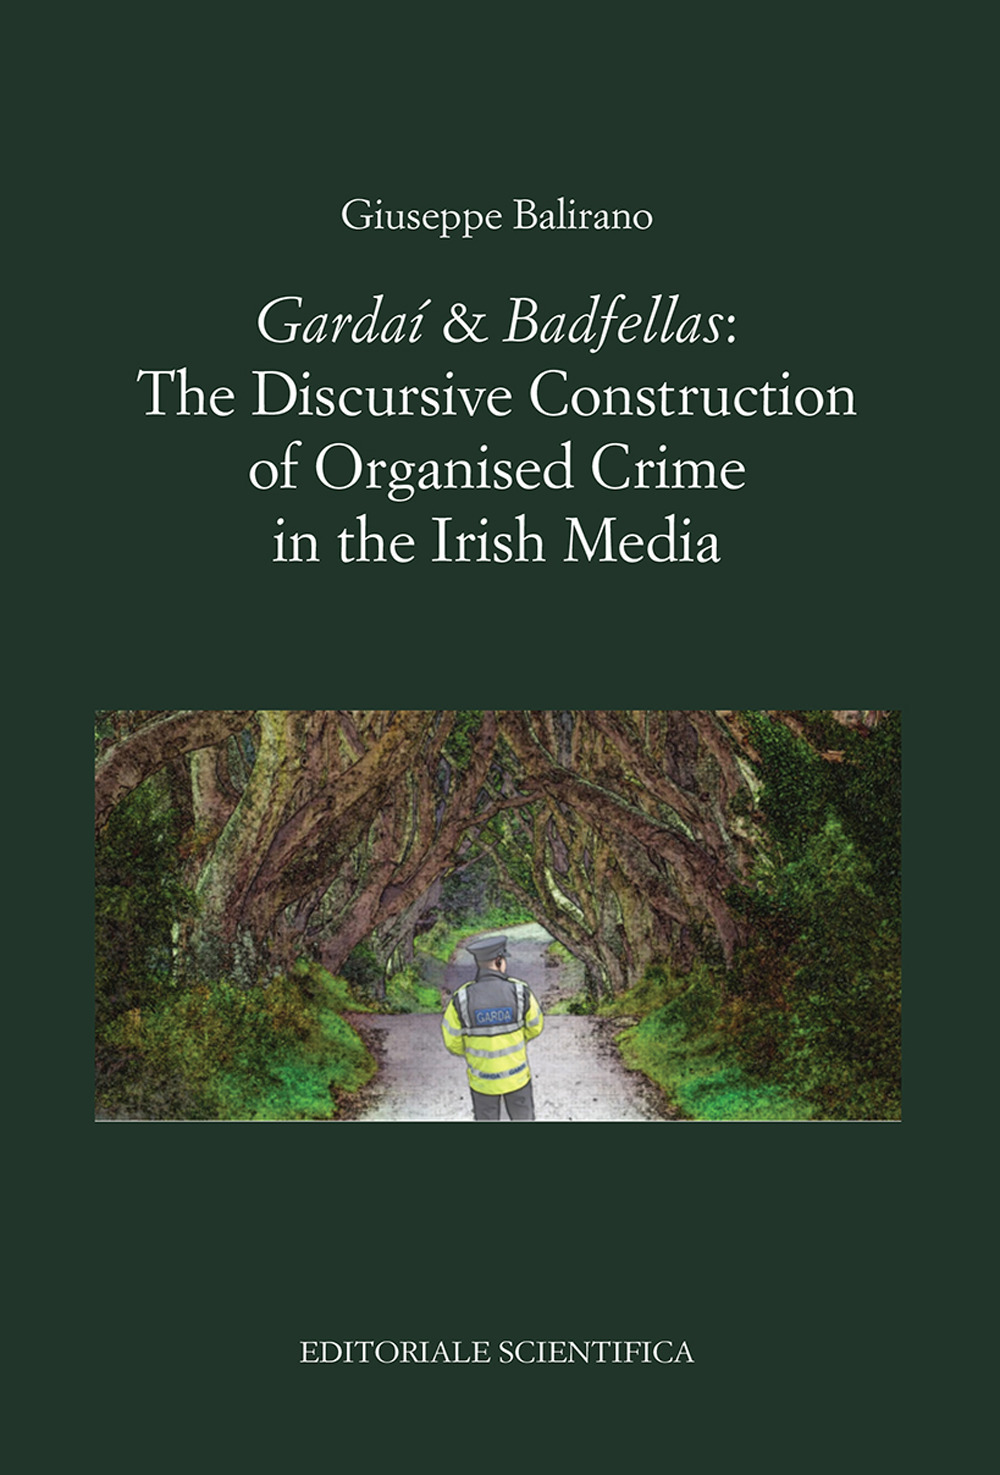 «Gardaí & Badfellas». The discursive construction of organised crime in the irish media